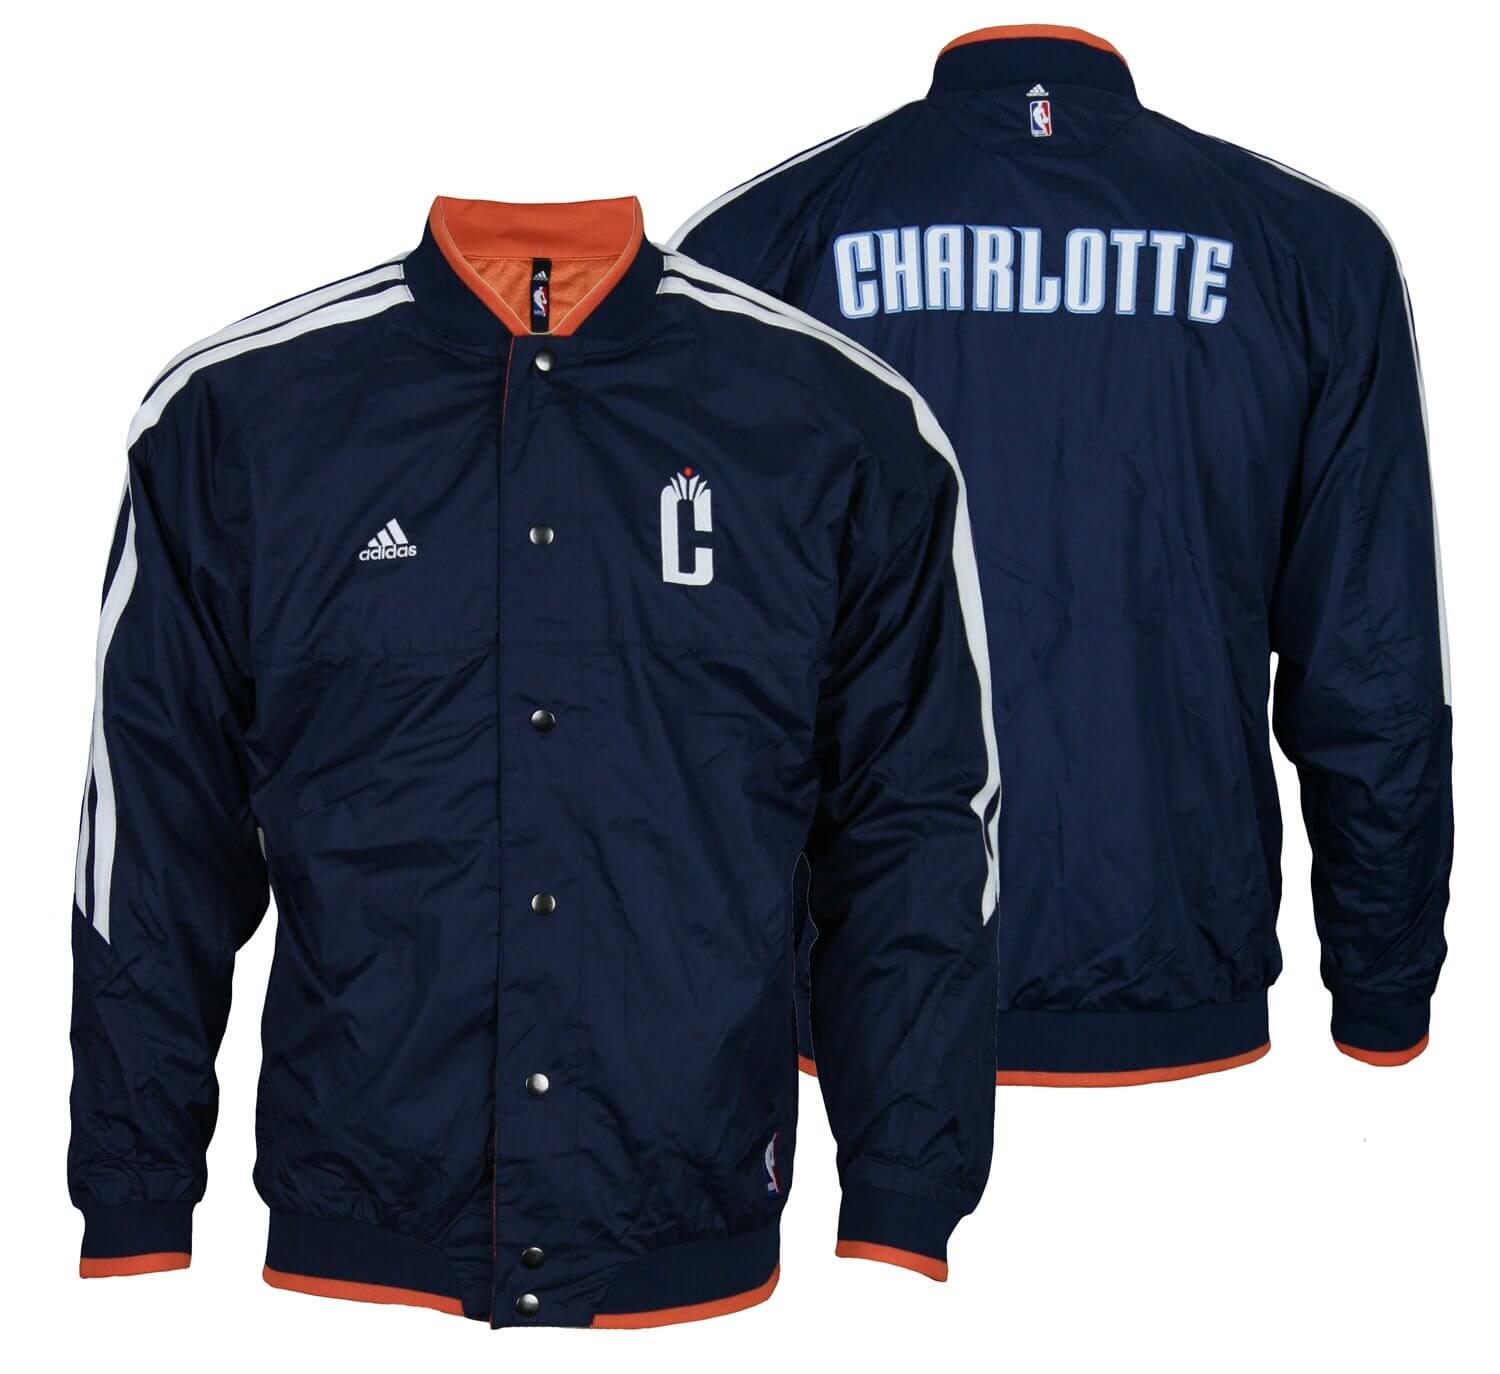 Adidas NBA Youth Charlotte Bobcats On Court Reversible Jacket - image 1 of 8